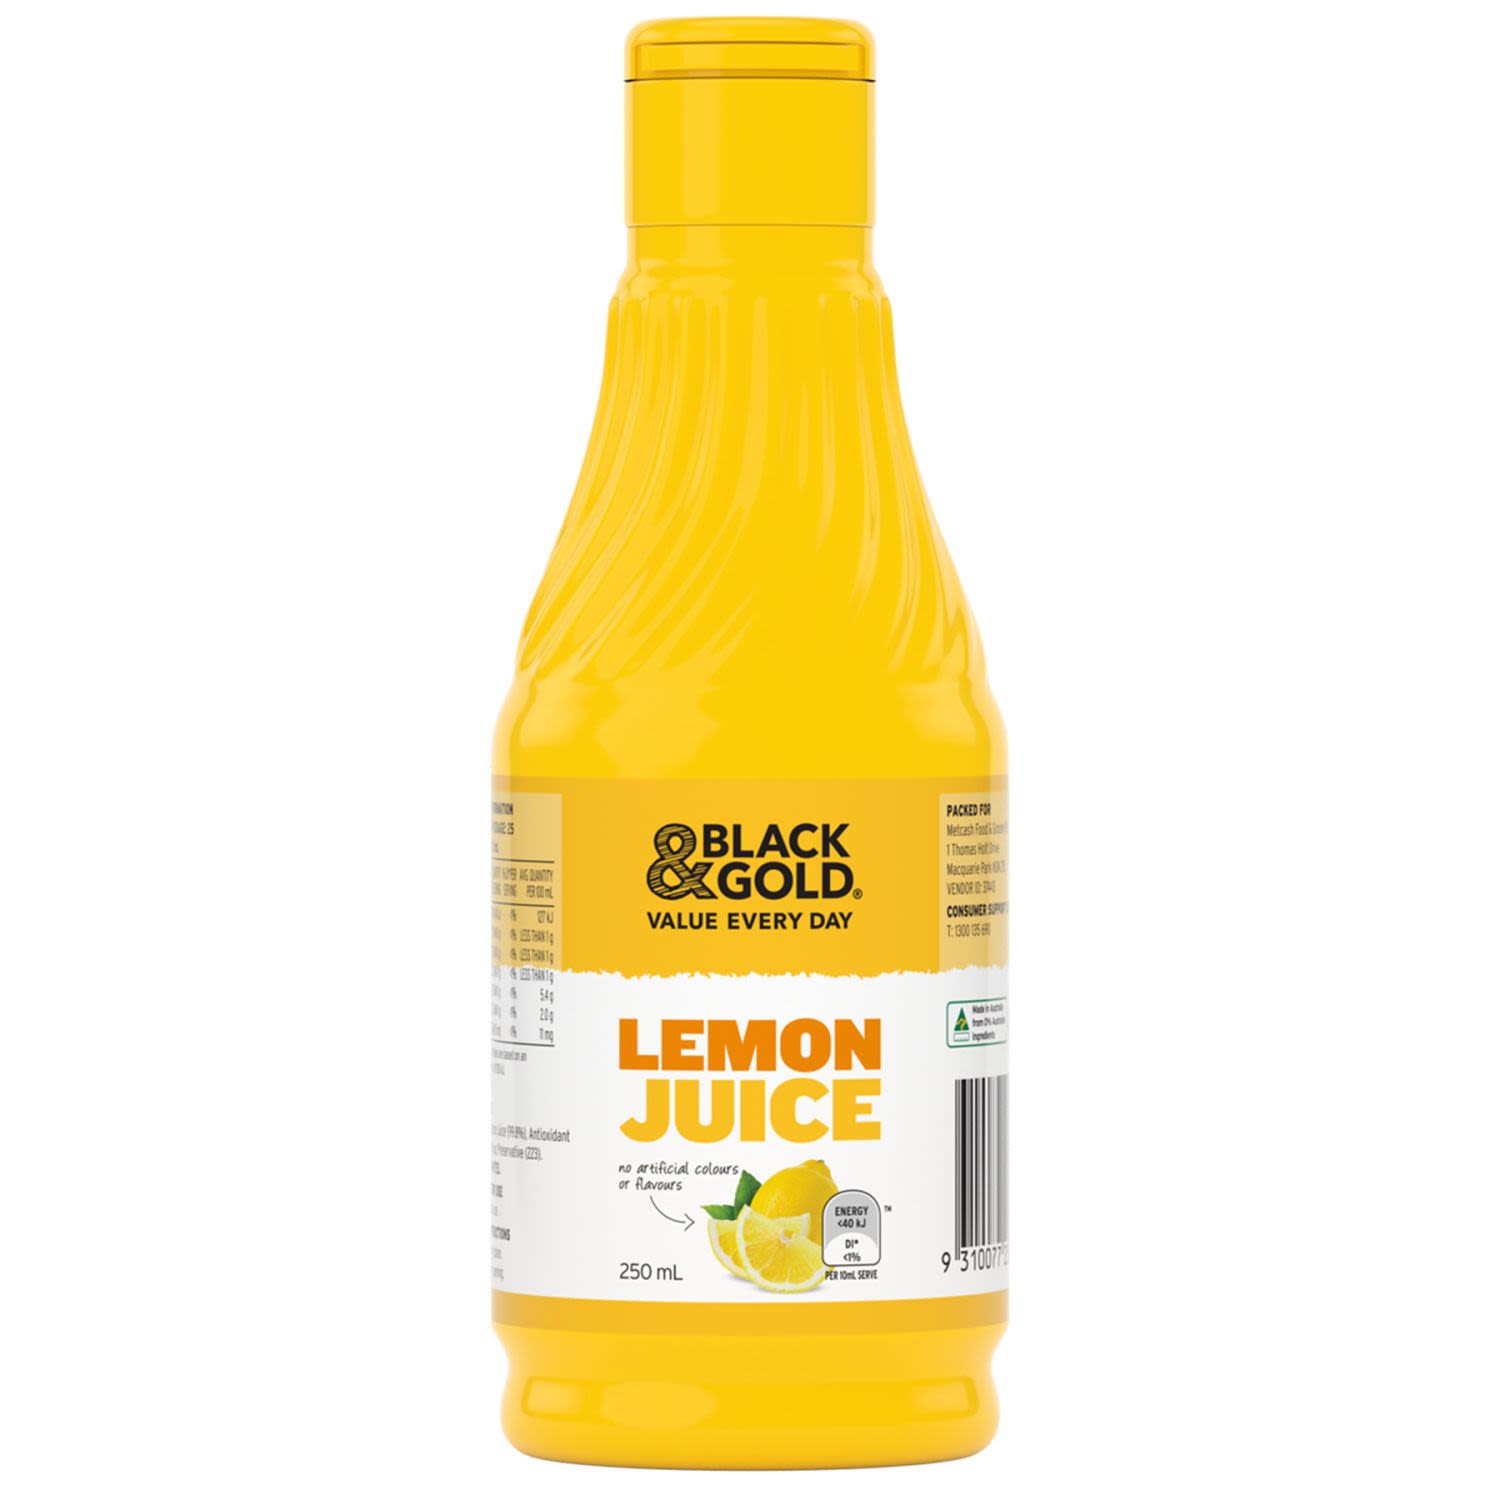 Black & Gold Lemon Juice 250Ml